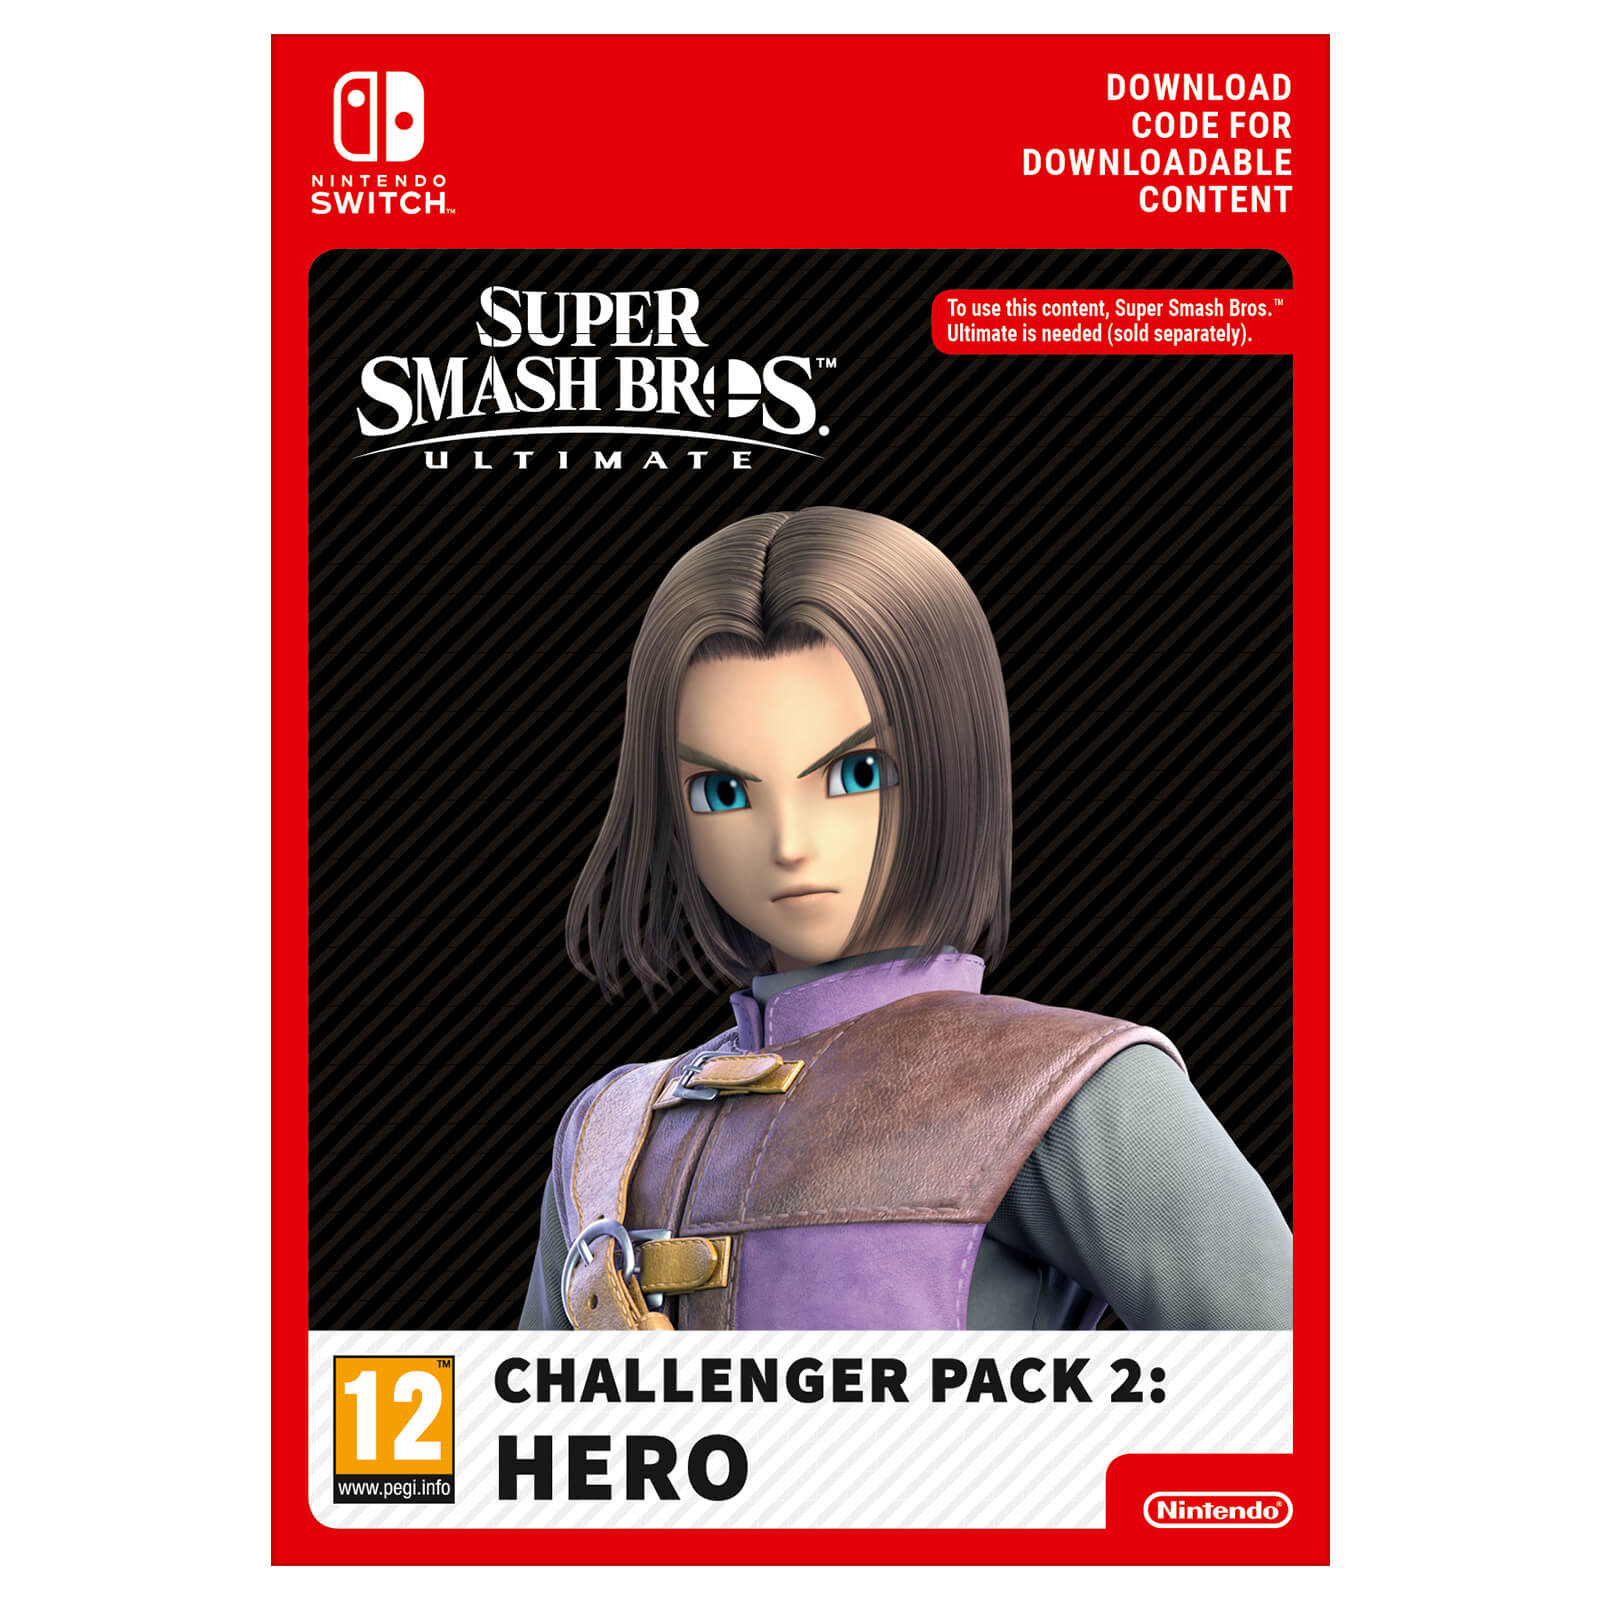 Super Smash Bros. Ultimate: Hero Challenger Pack Digital Download Key (Nintendo Switch)